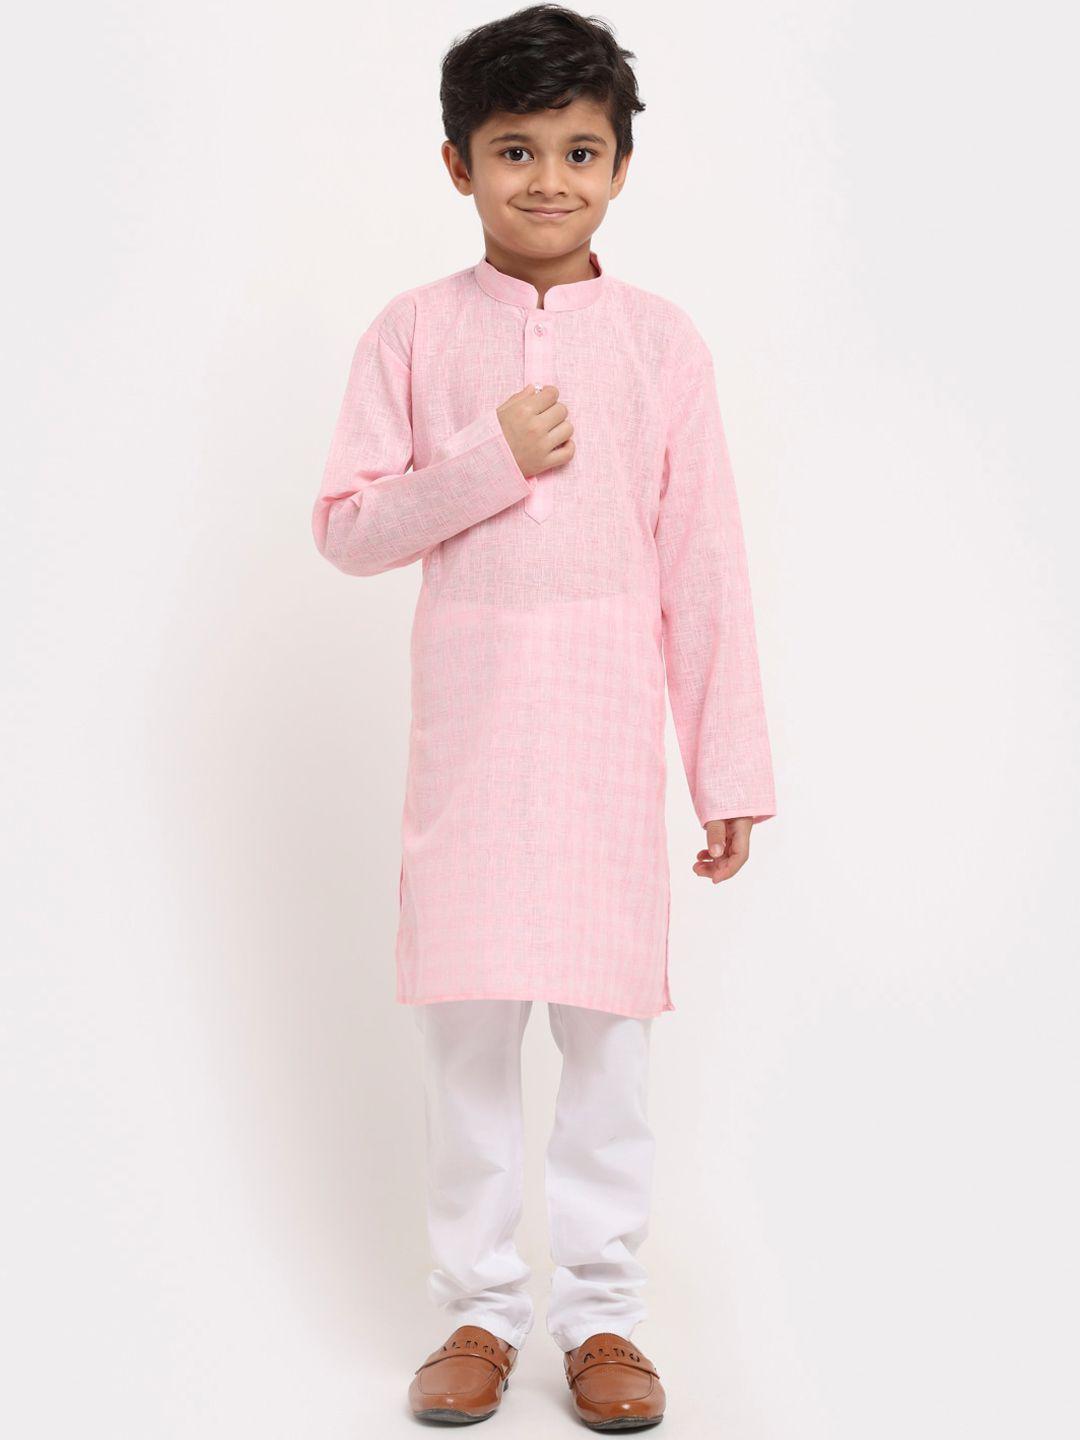 kraft india boys pink kurta